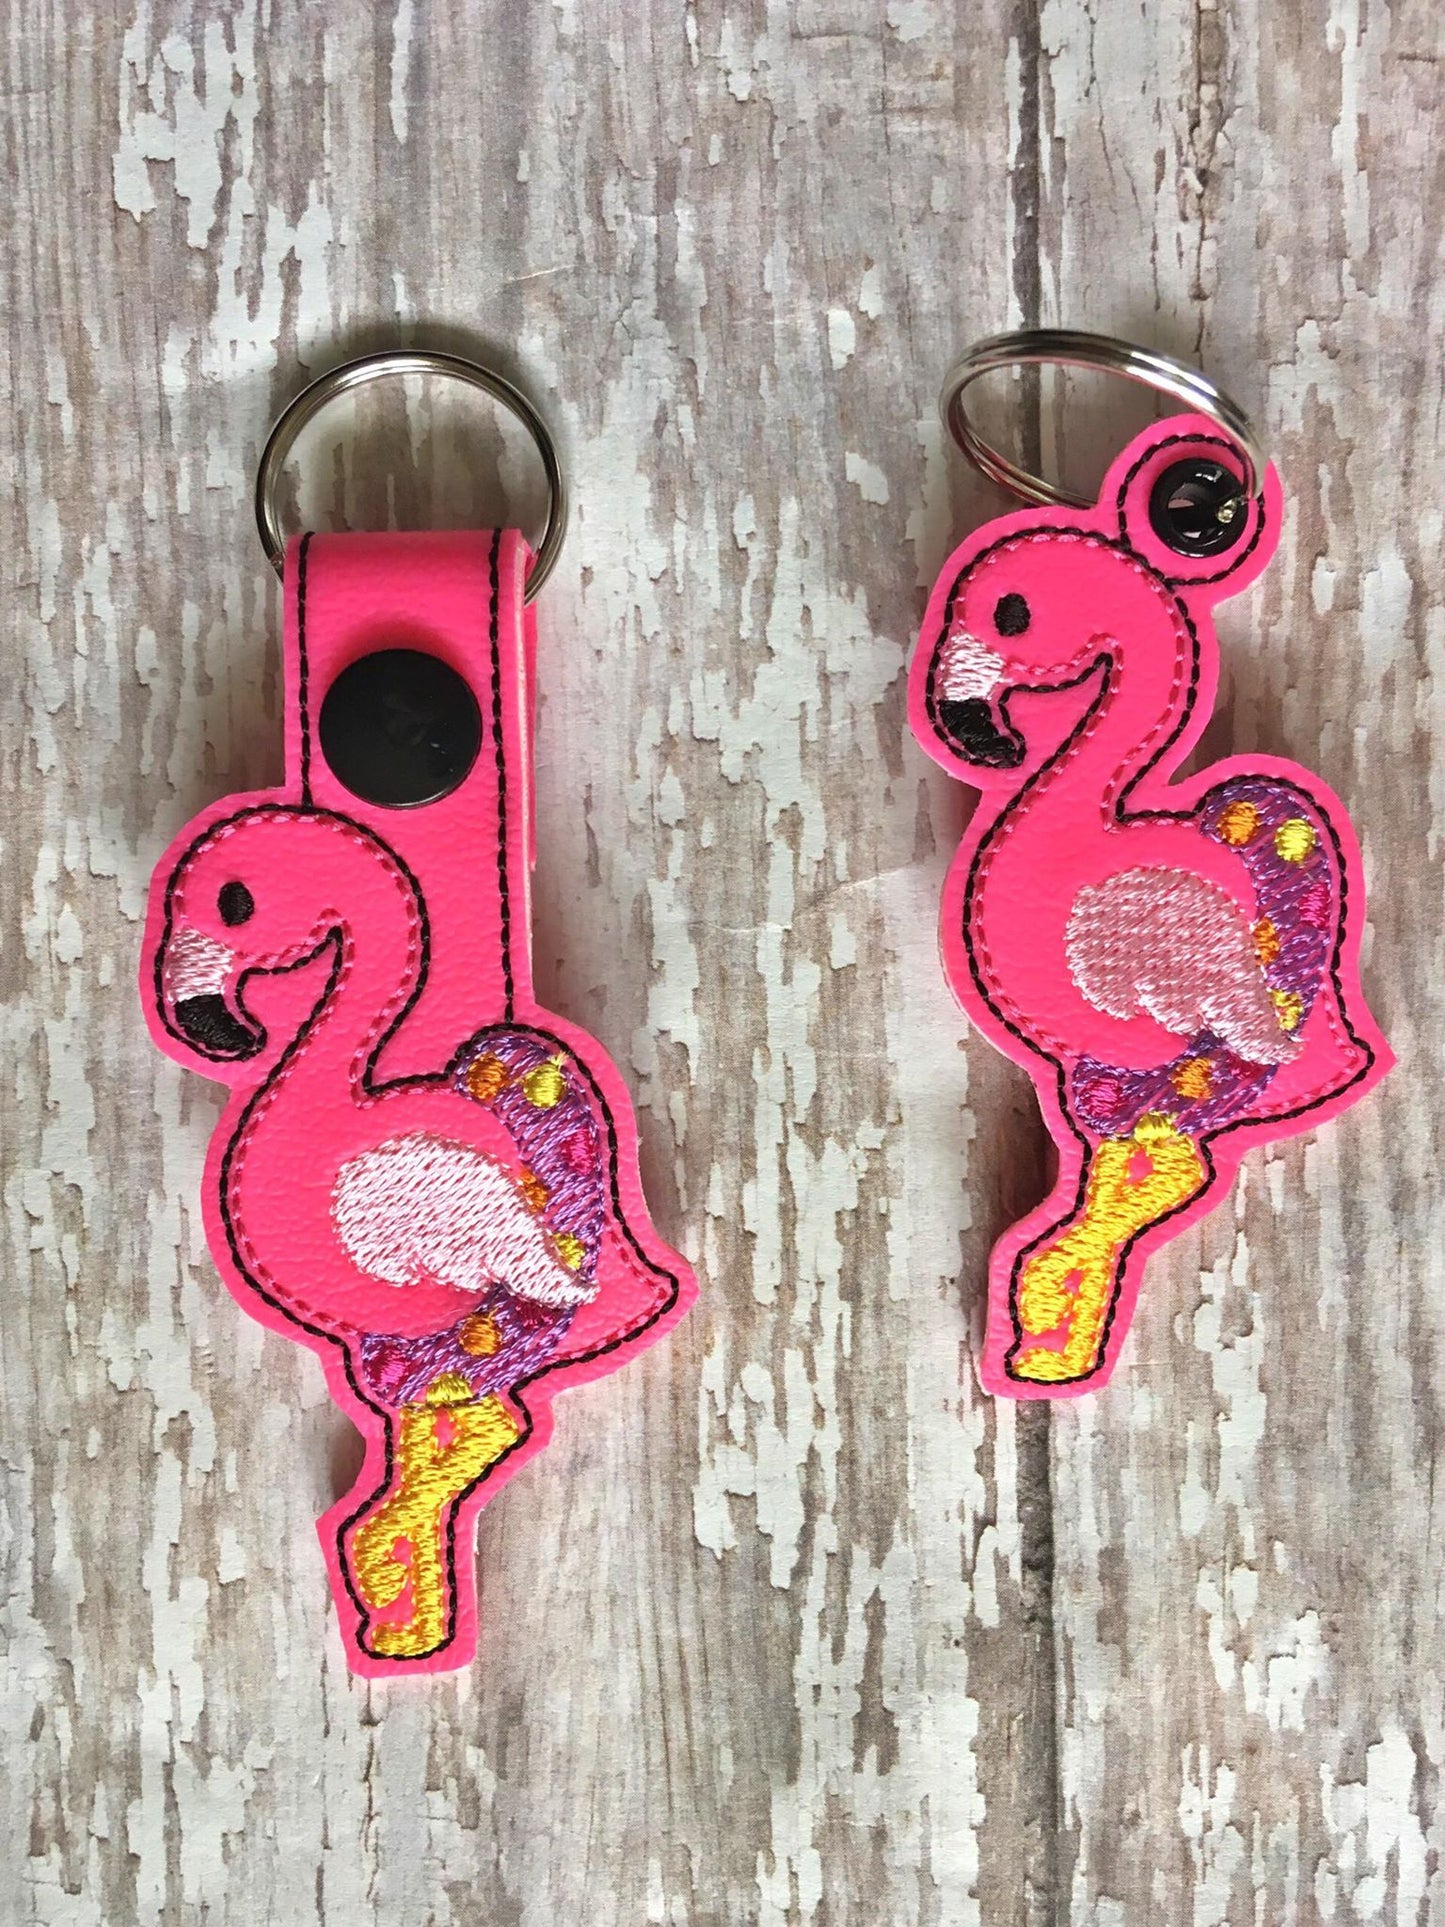 Floating Flamingo Fobs -  DIGITAL Embroidery DESIGN